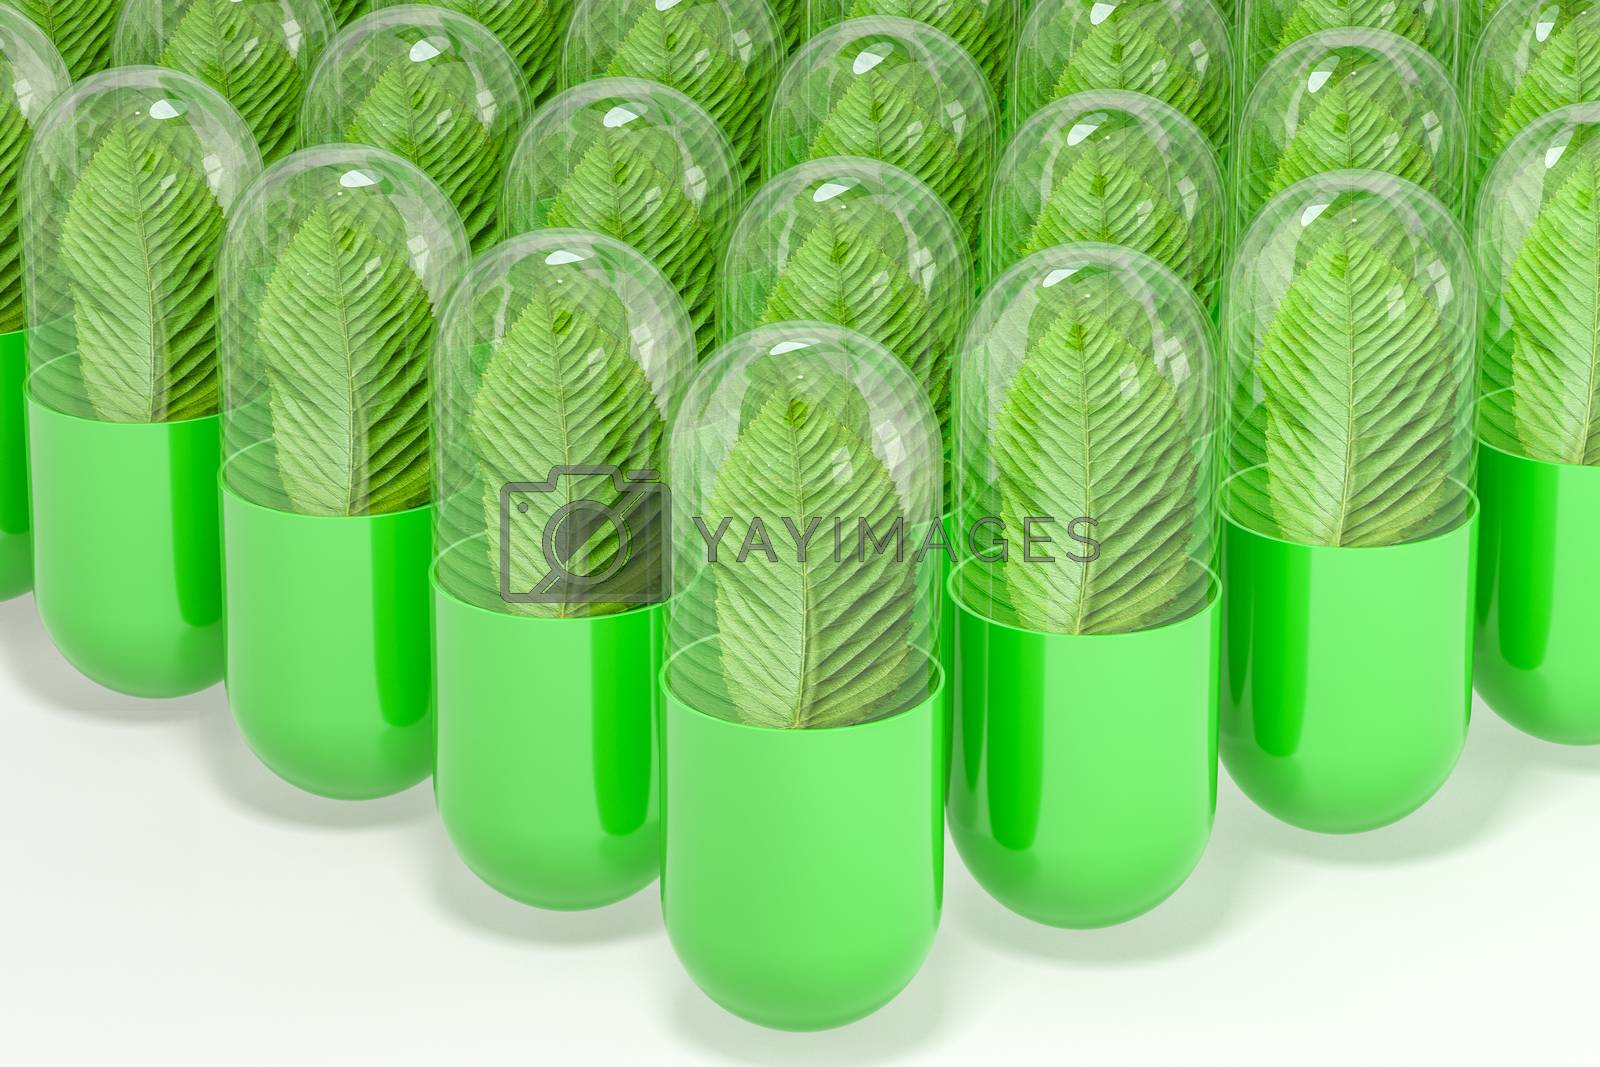 Royalty free image of 3d rendering, green capsule with leaf in it by vinkfan